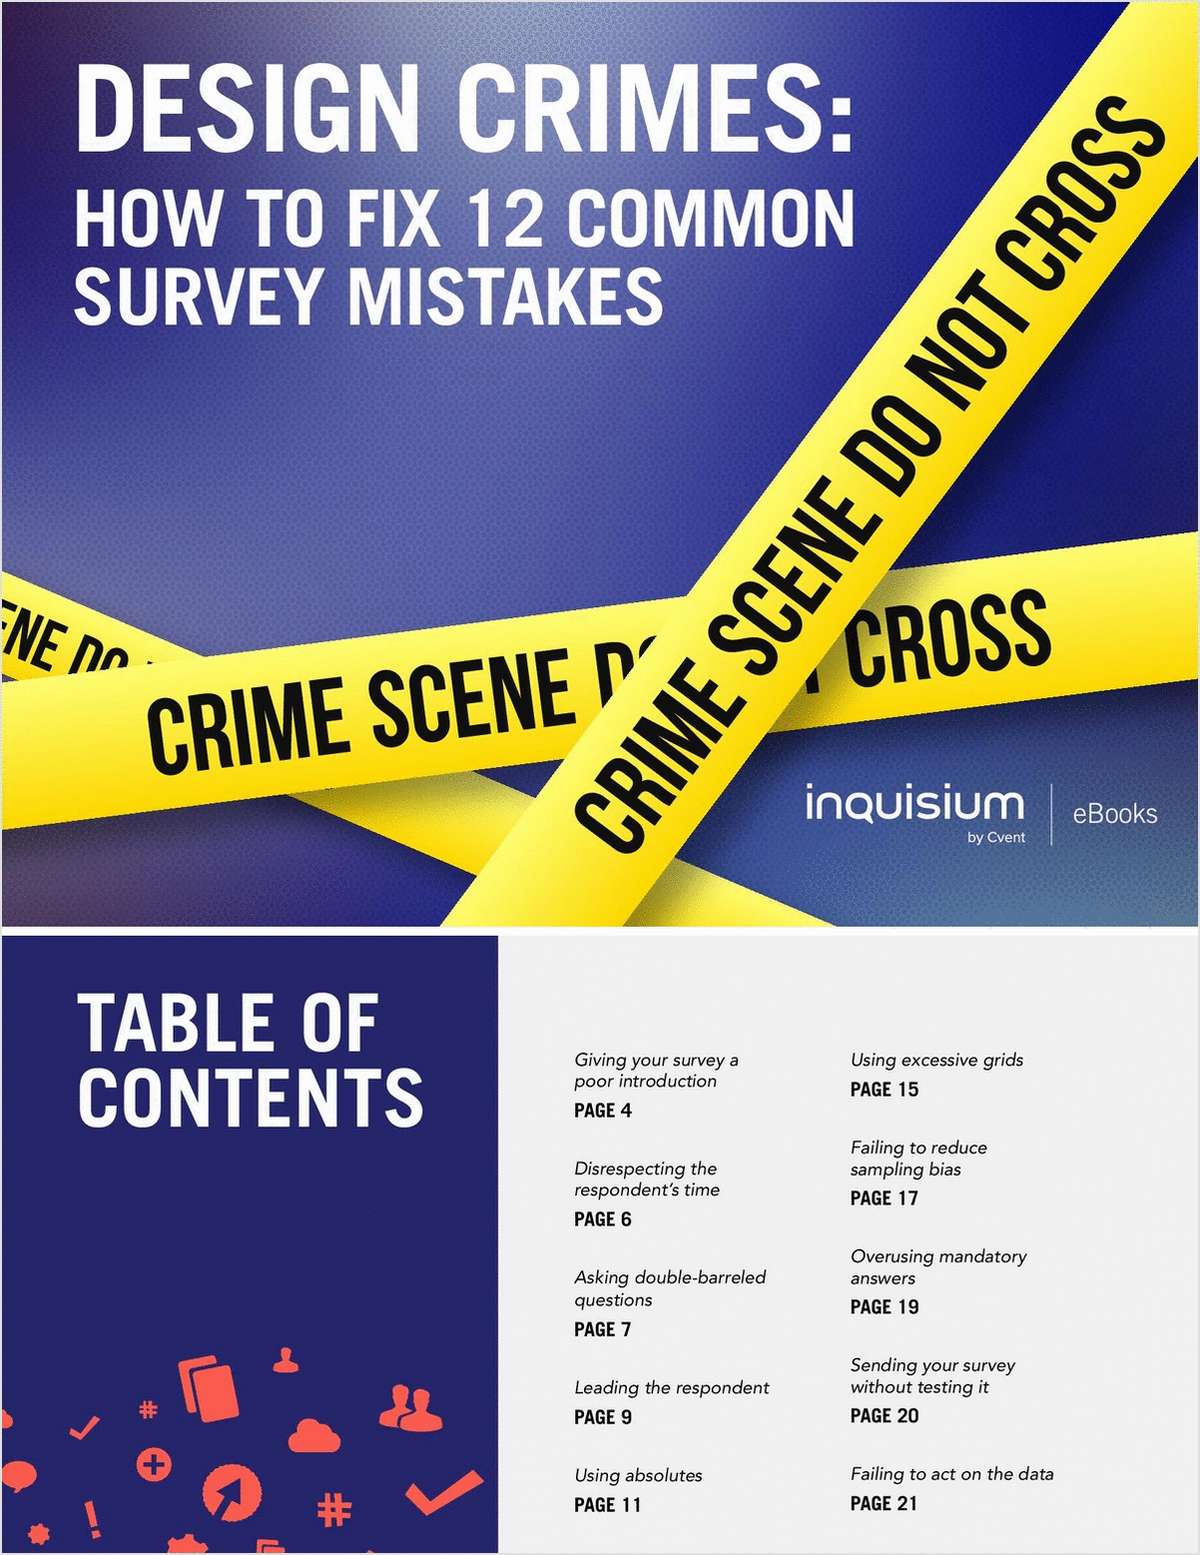 Design Crimes: How to Fix 12 Common Survey Mistakes